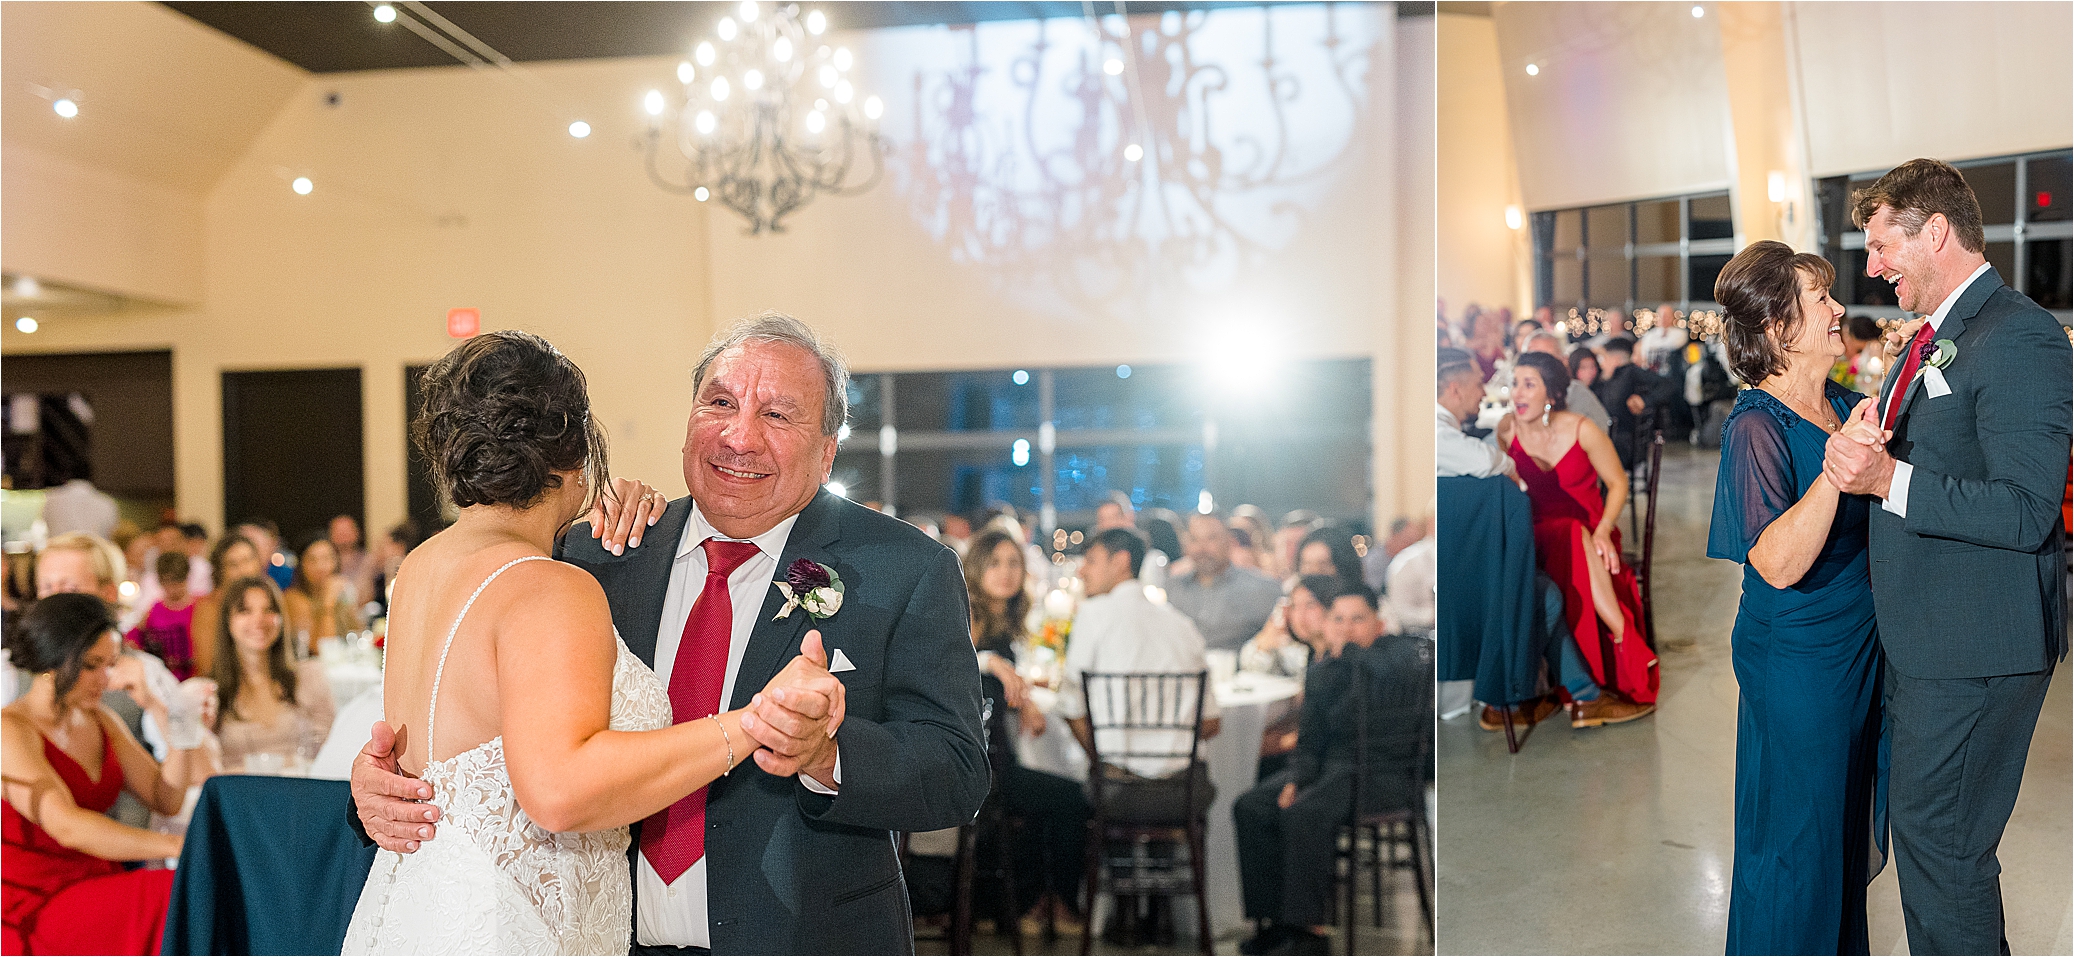 Parent Dances at Paniolo Ranch during a wedding reception